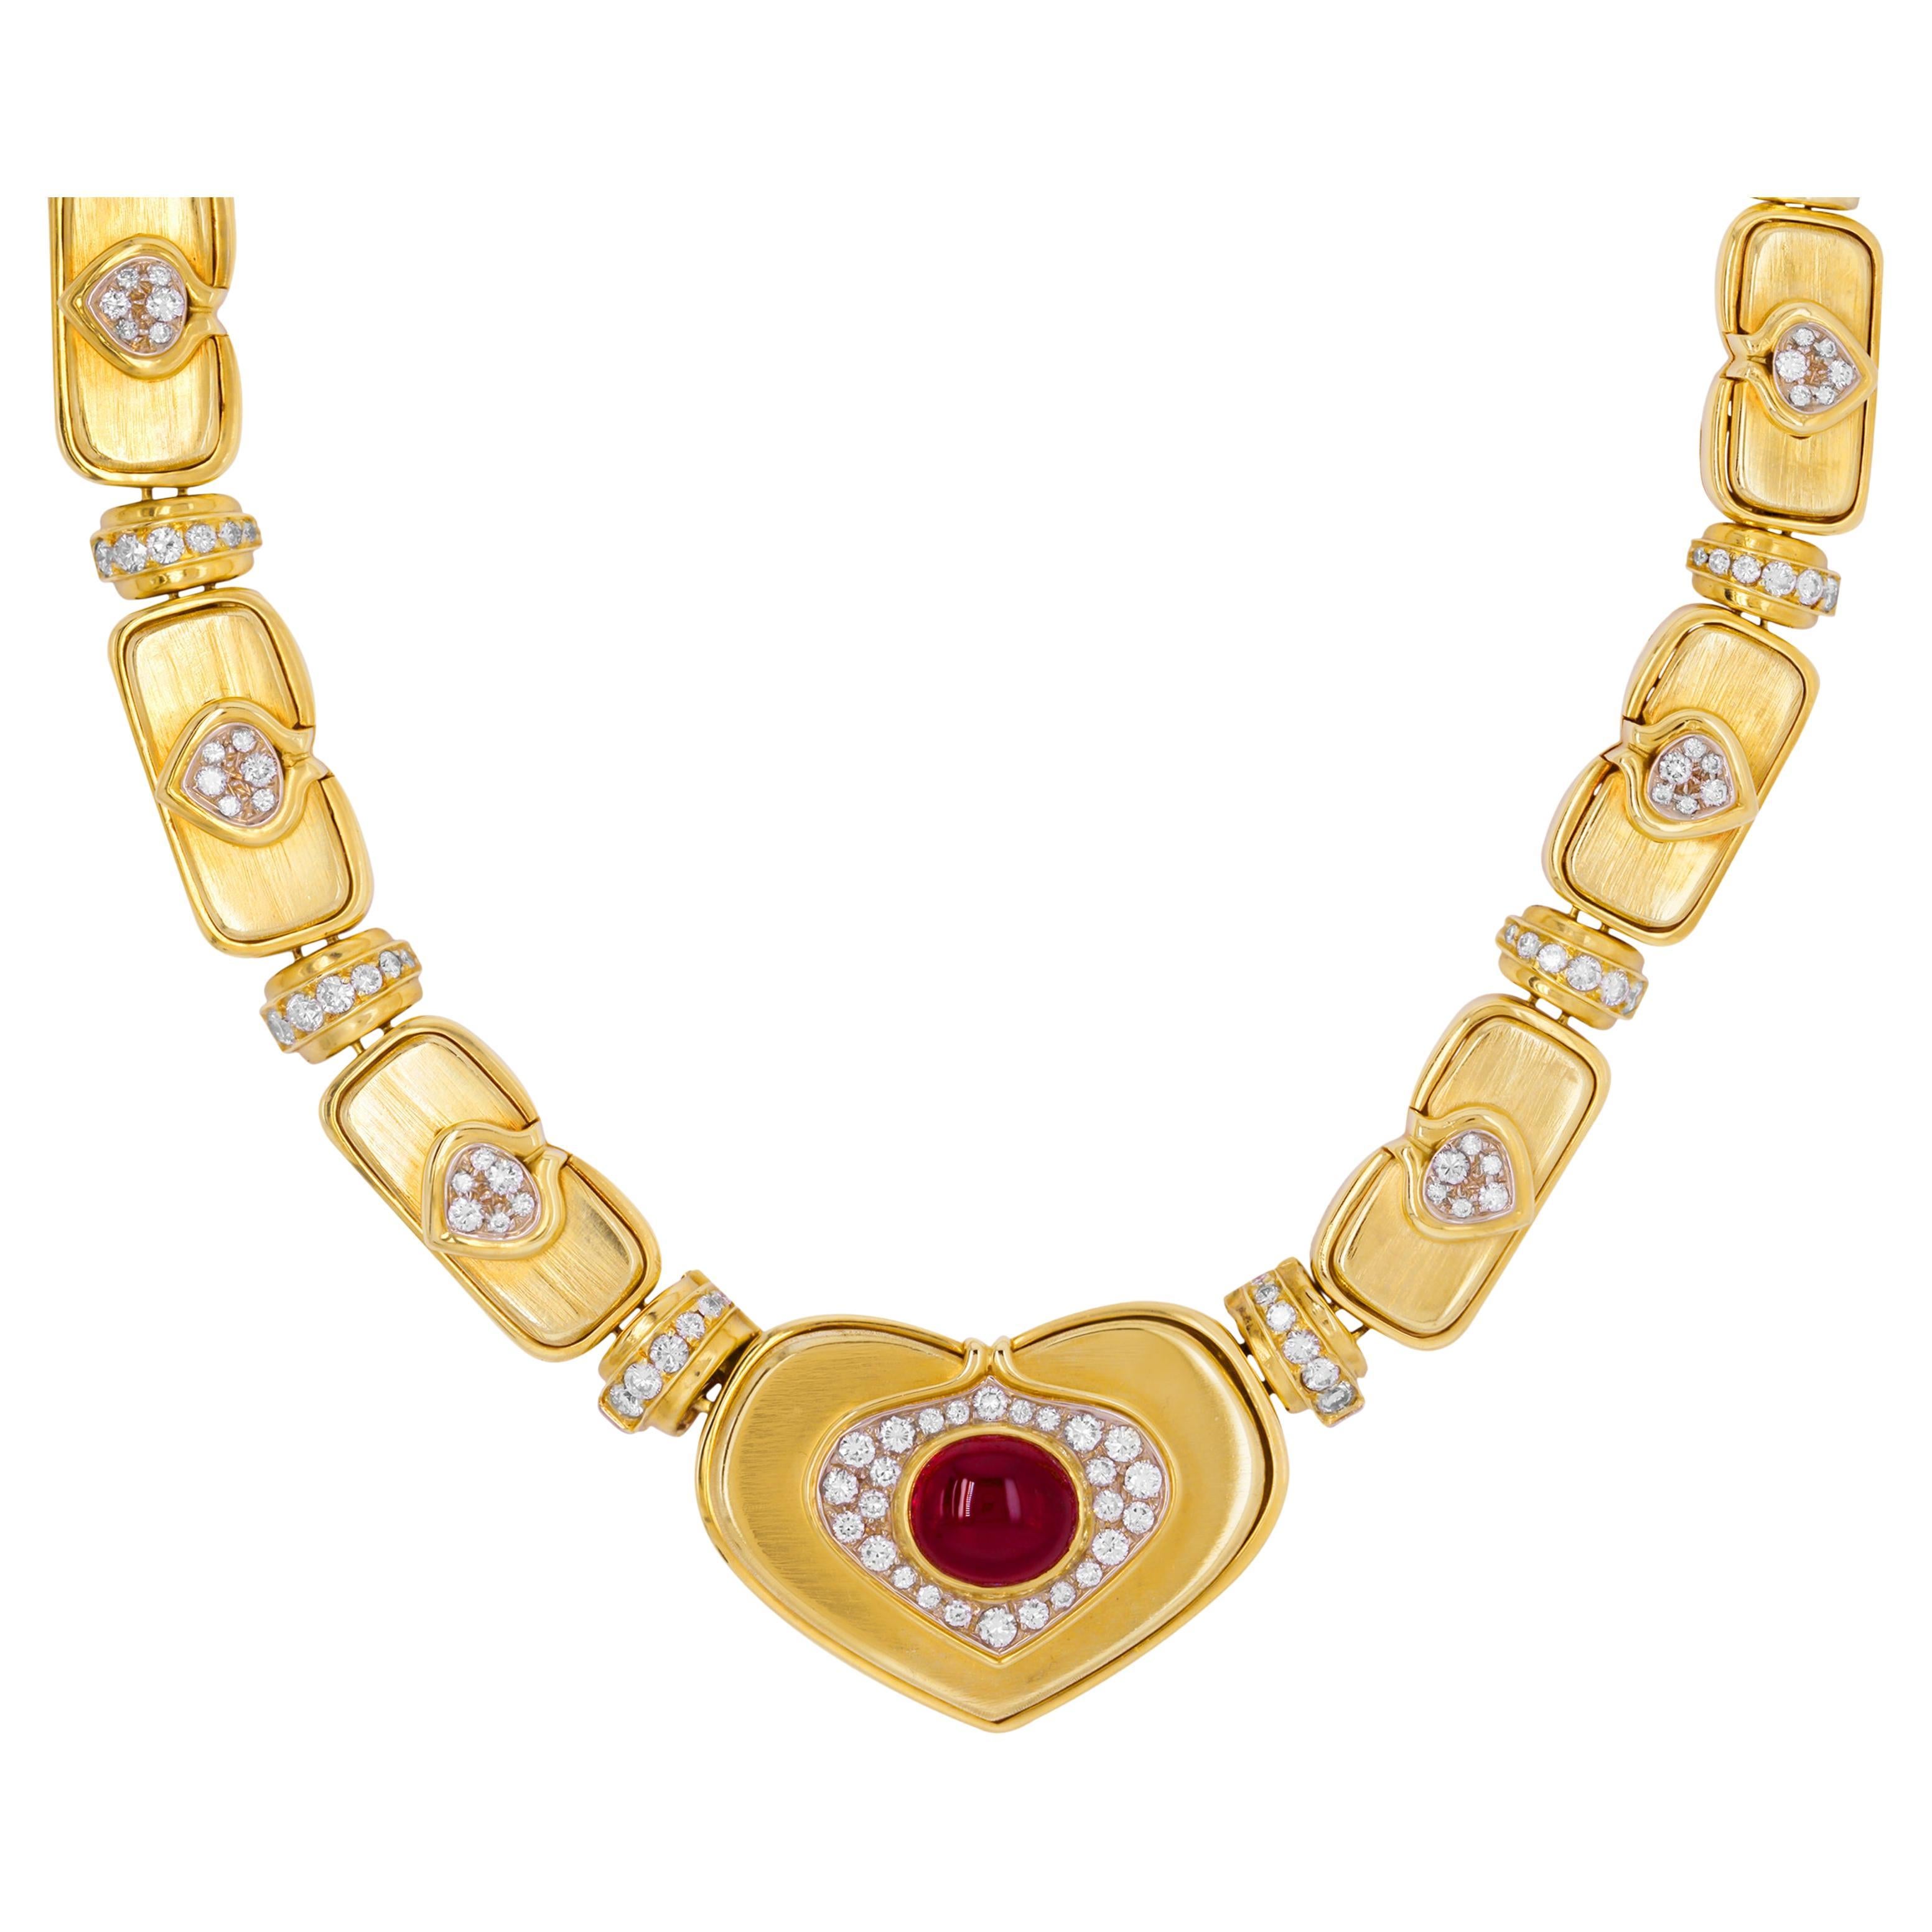 Harry Winston 18 Karat Gold Diamant Cabochon Burma Rubin Herz Anhänger Choker Halskette